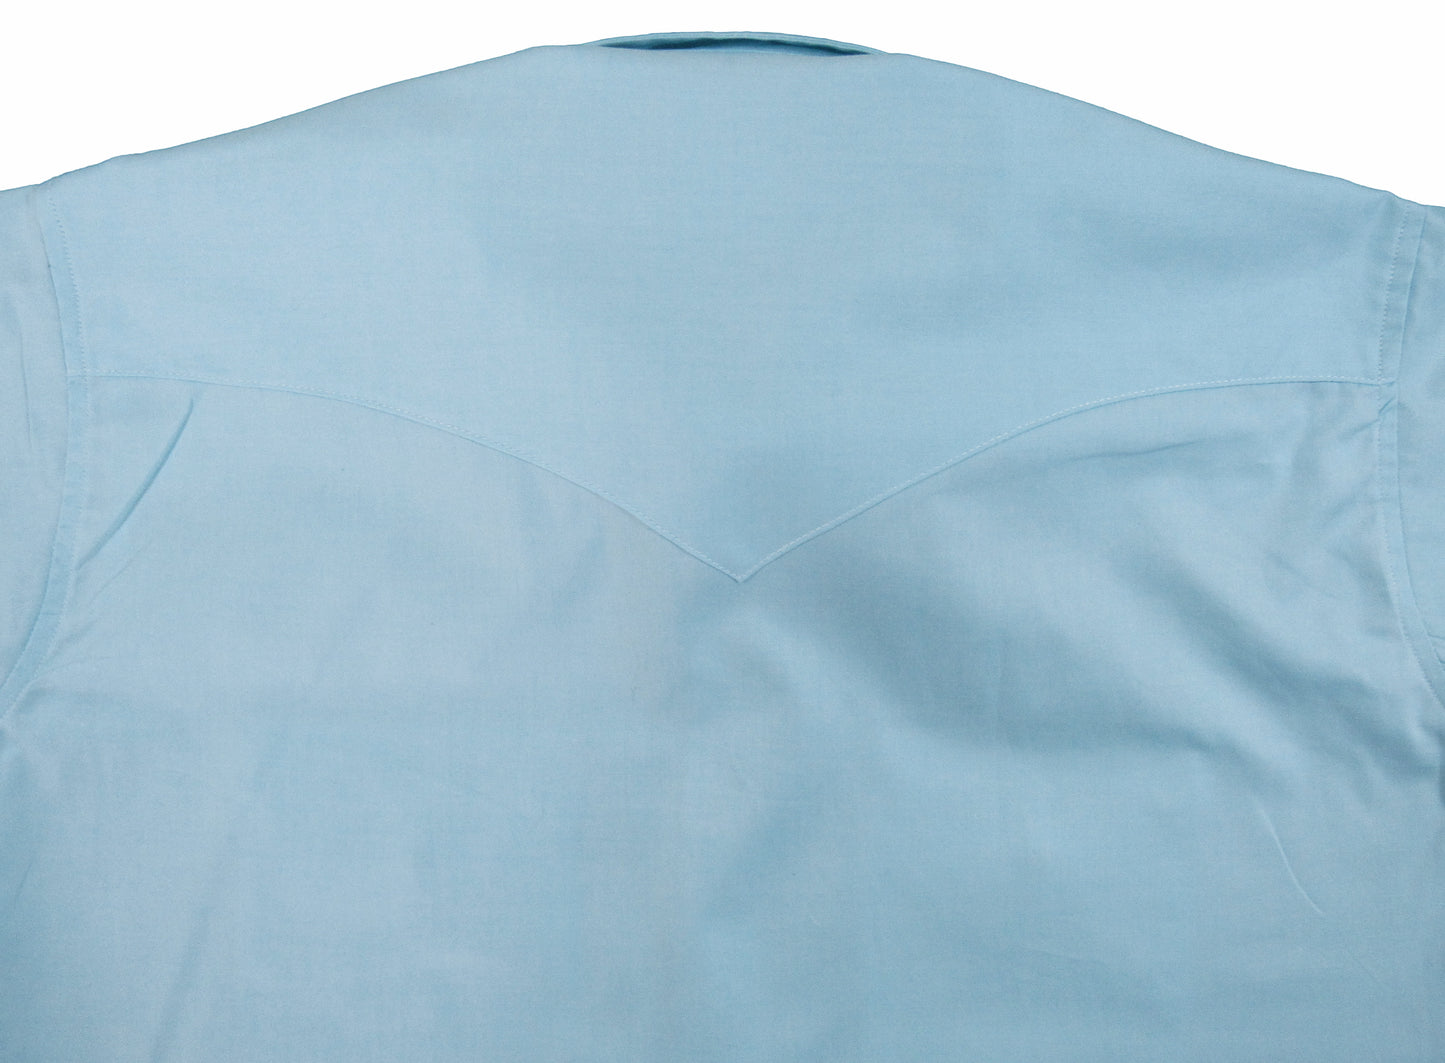 Flying R Ranchwear - Blazer Solids - Turquoise Blue - Long Sleeve